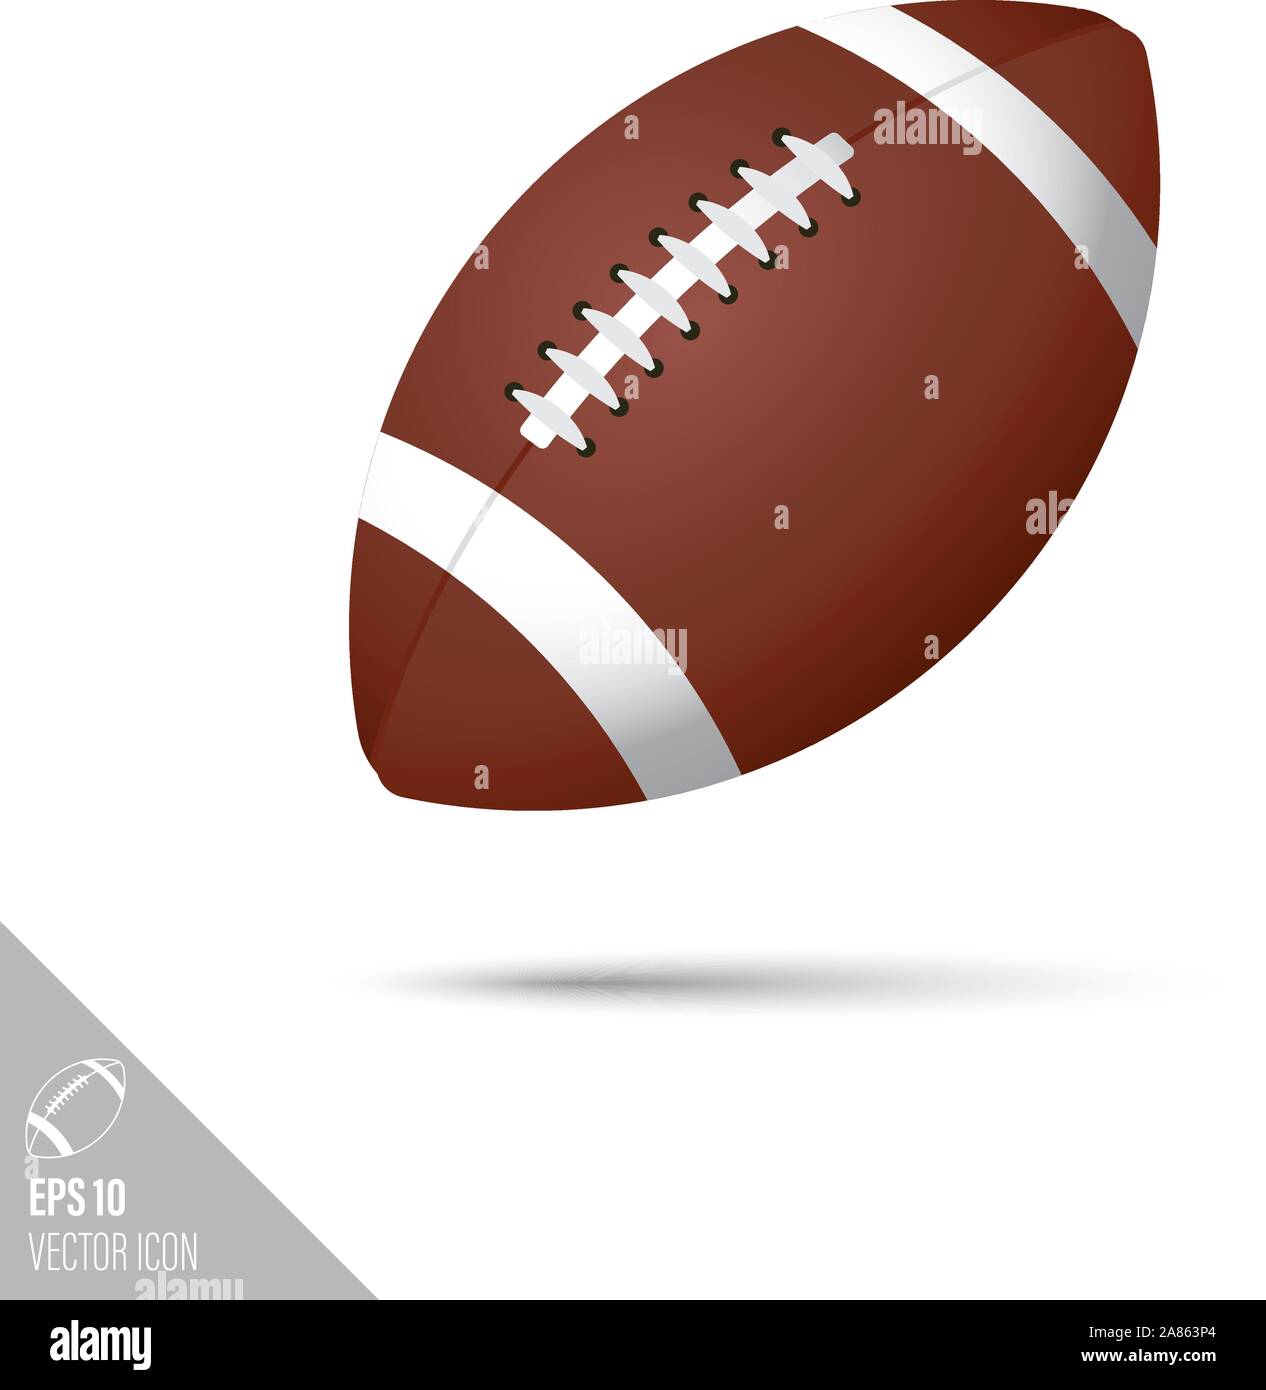 Glatten stil American Football oder rugby ball-Symbol. Sportgeräte Vector Illustration. Stock Vektor